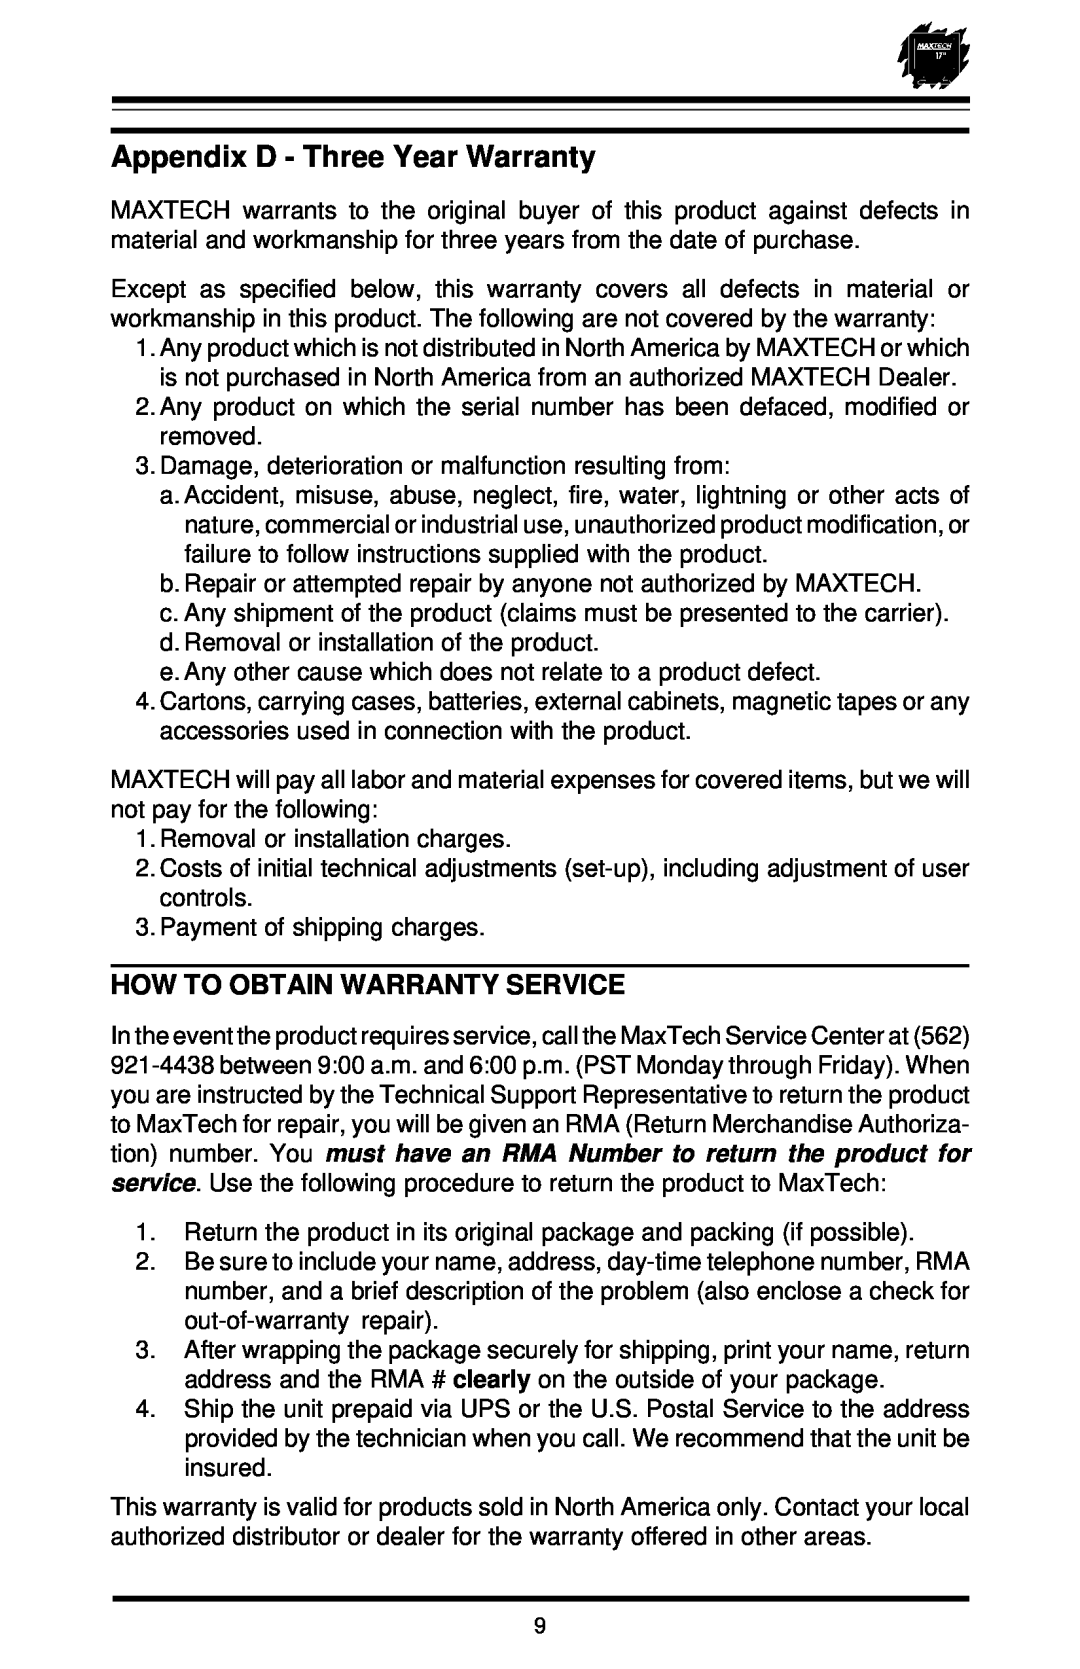 MaxTech XT-7871 user manual Appendix D - Three Year Warranty, How To Obtain Warranty Service 